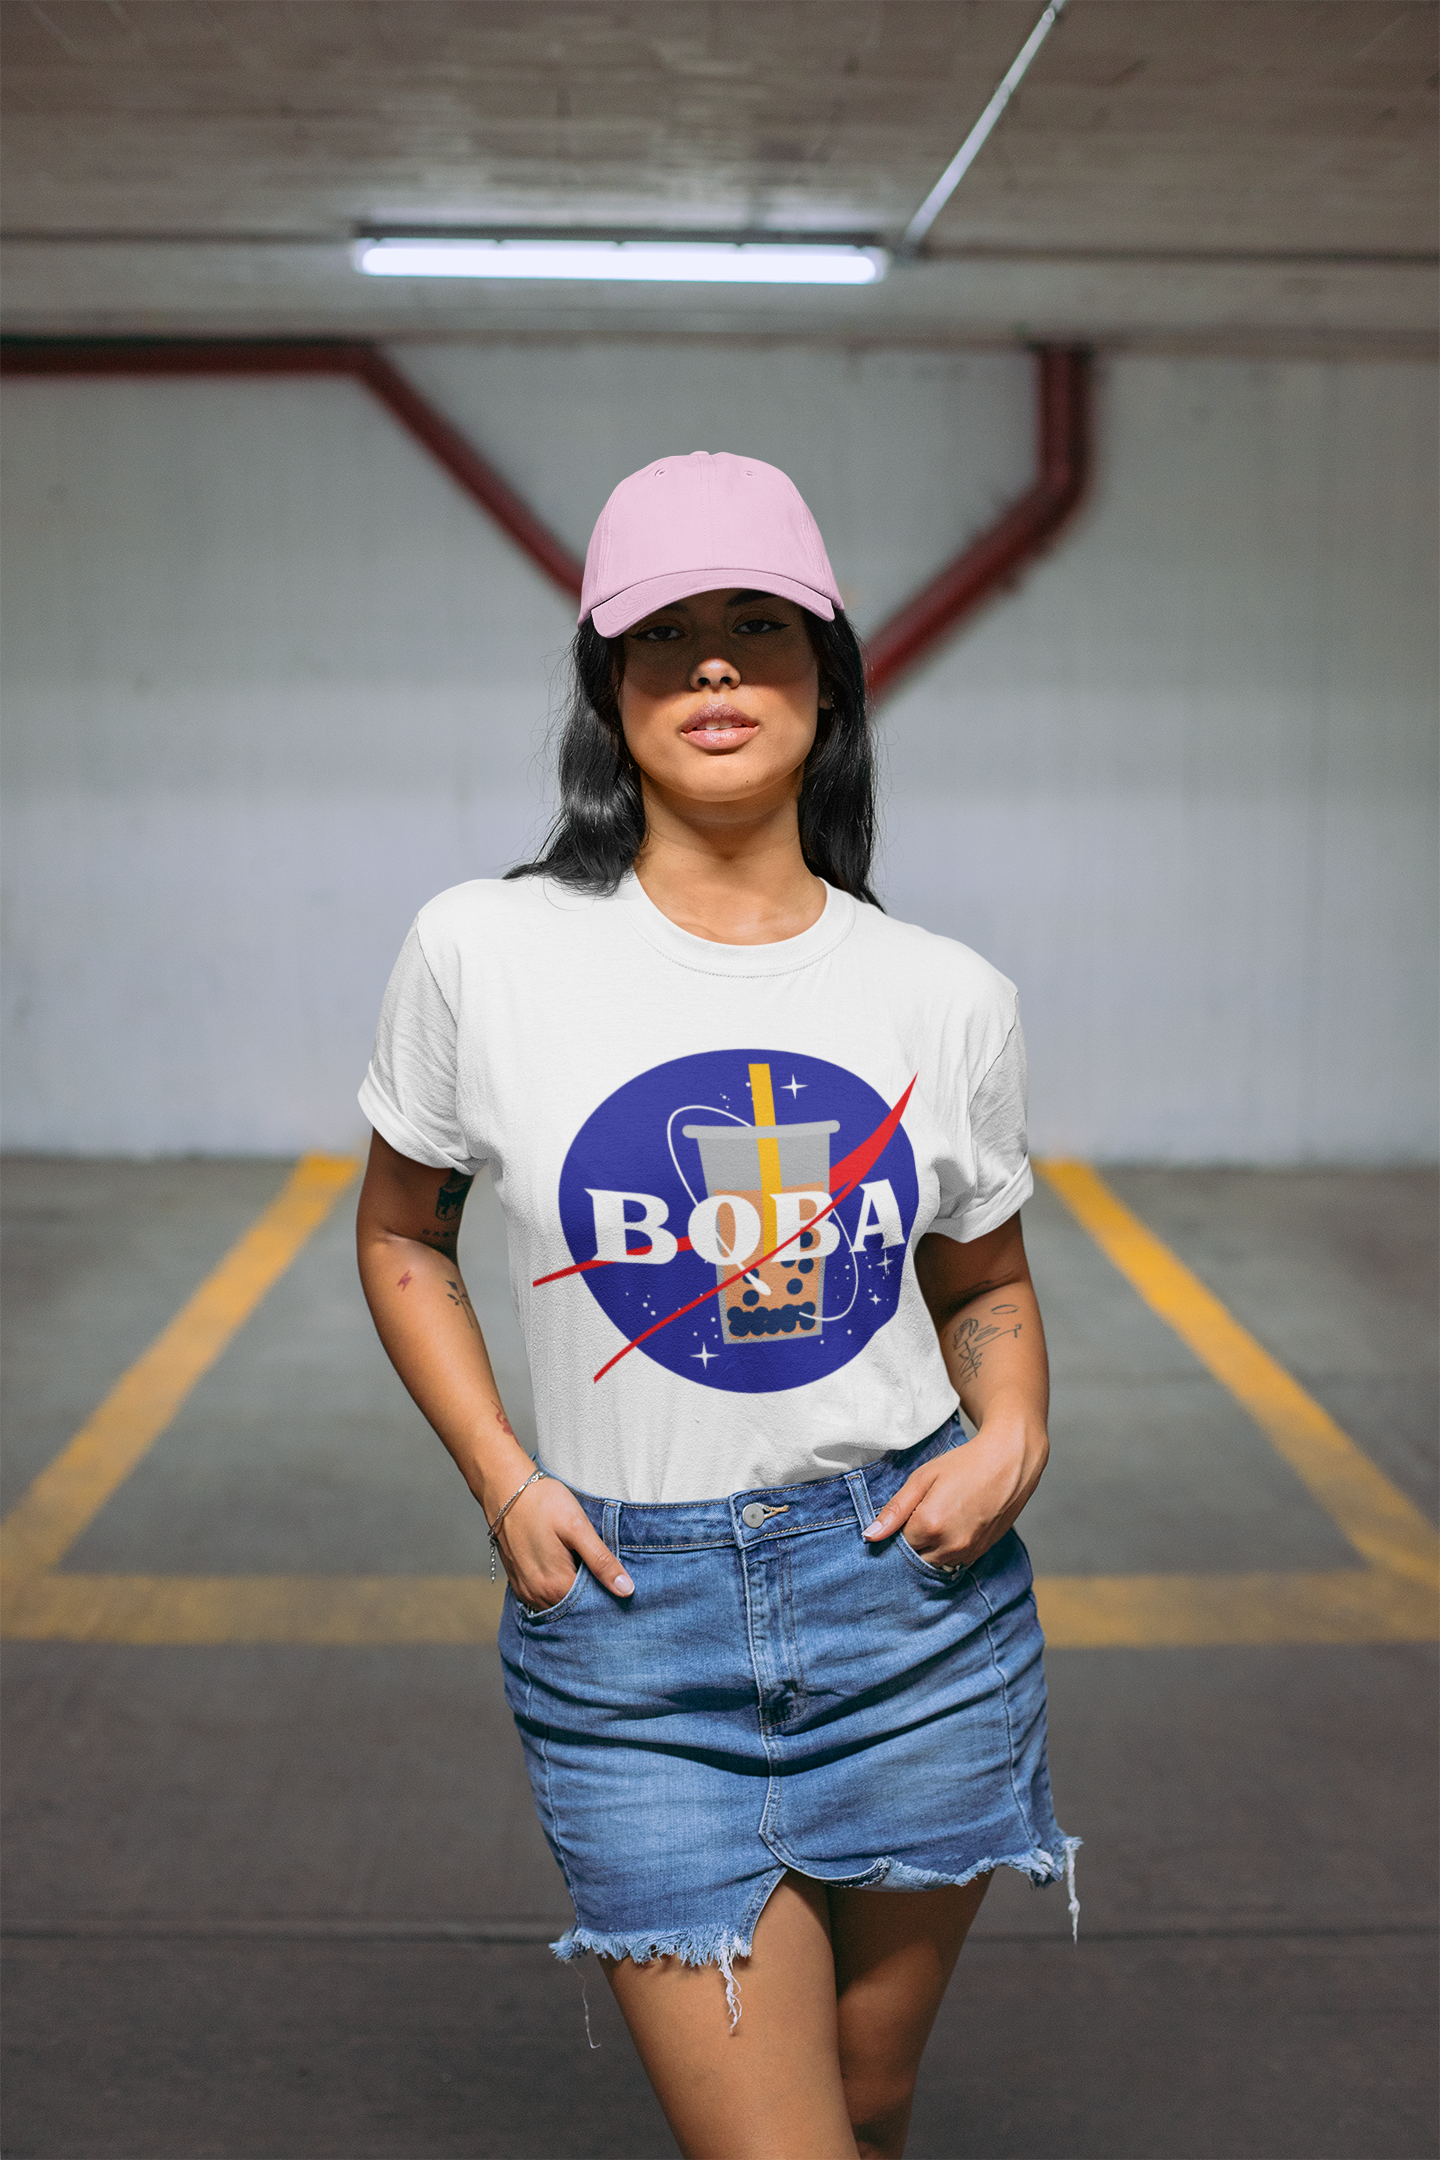 Coy woman wearing a Nasa BOBA shirt